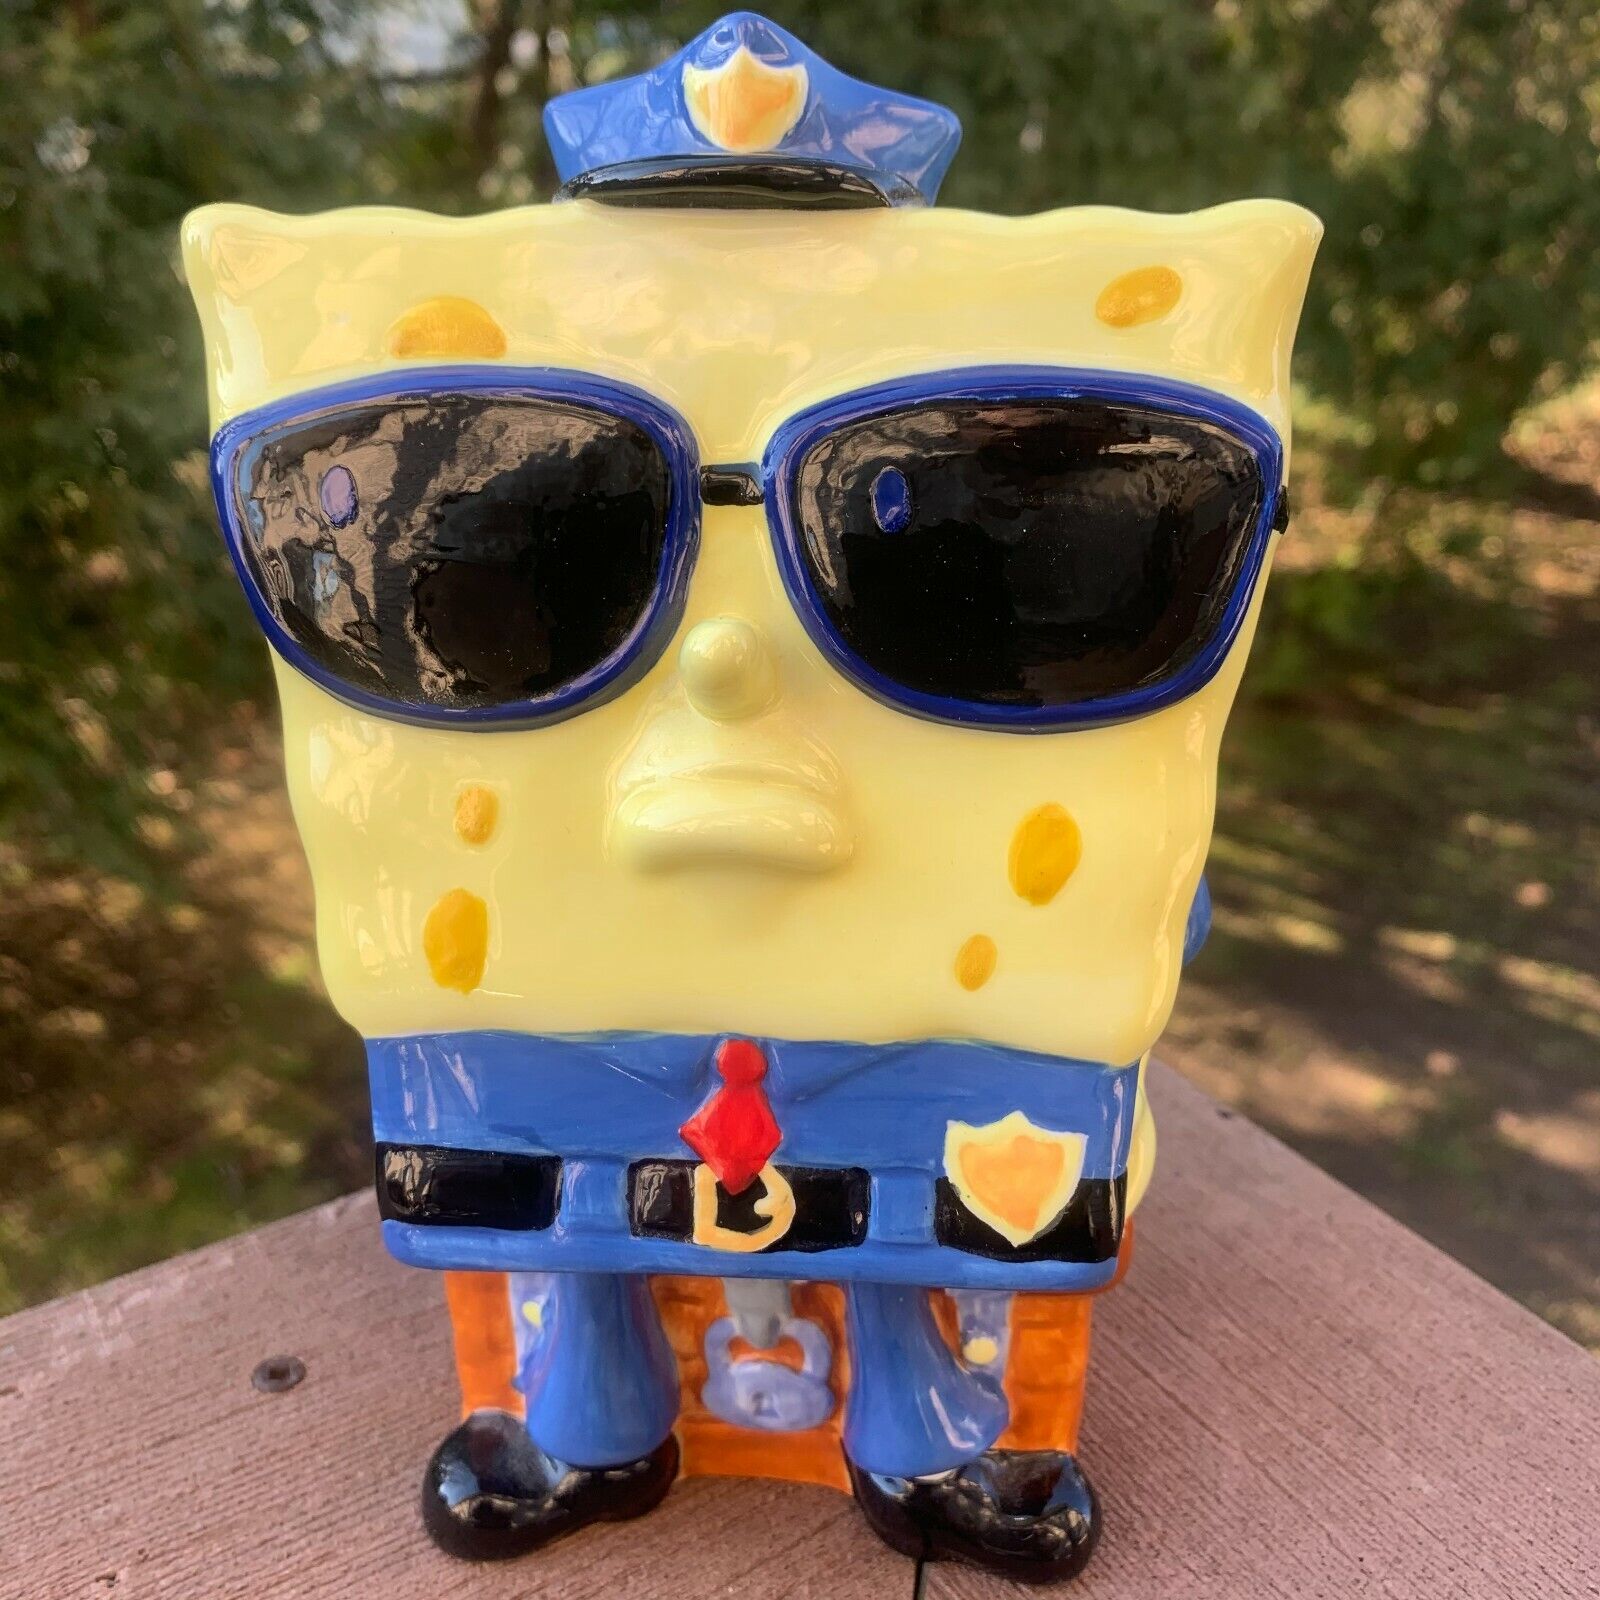 SpongeBob Squarepants Police Officer Ceramic Piggy Coin Bank Nickelodeon EX-Cond